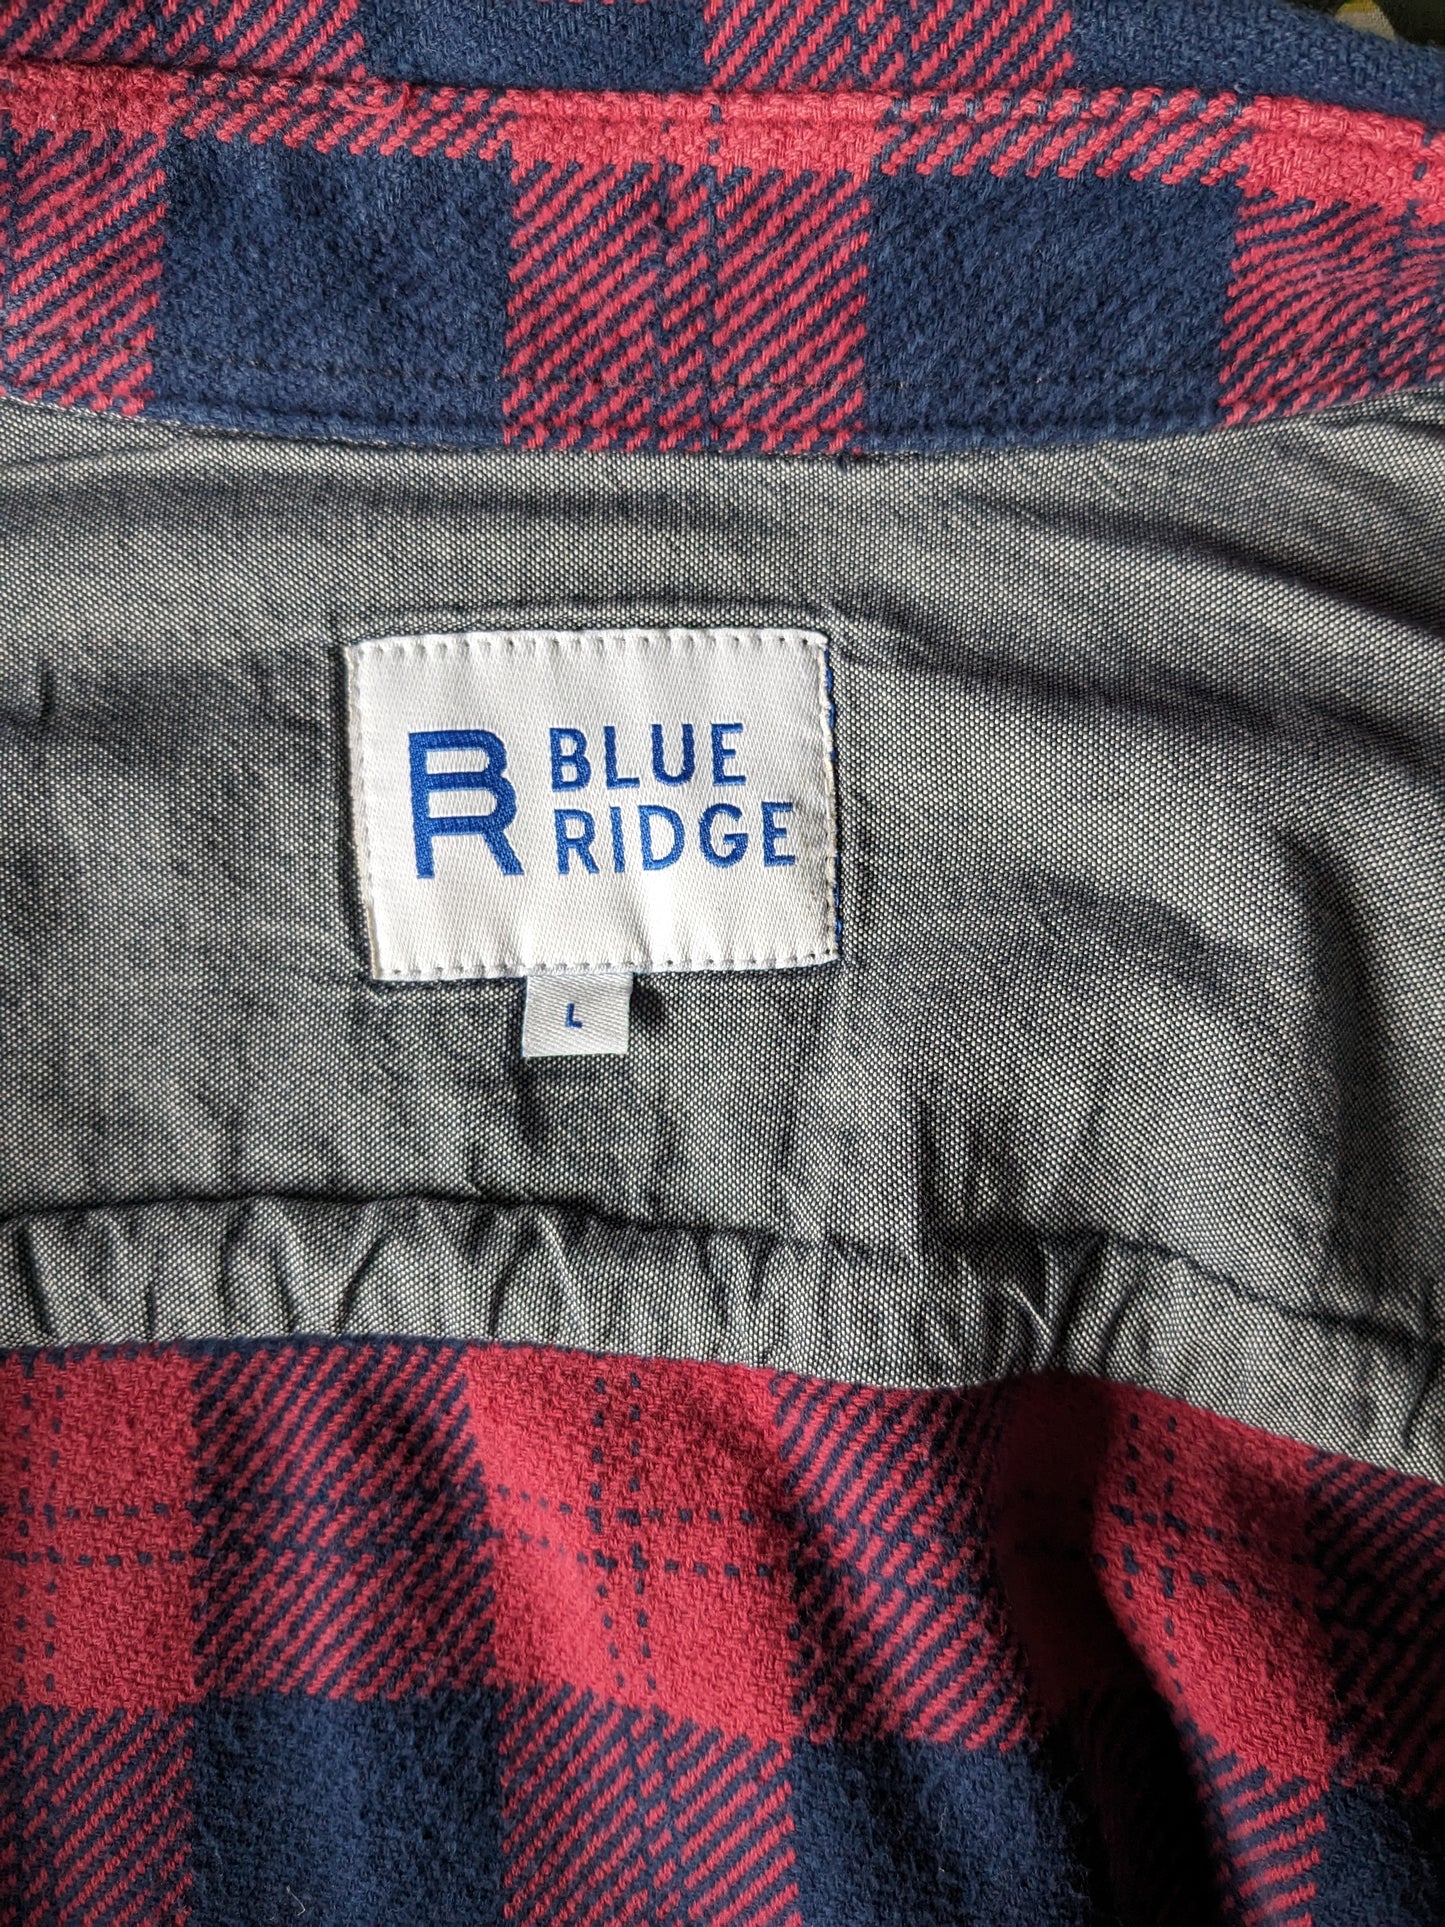 Blue Ridge Flanellen Hemd. Dicker Stoff. Blaurosa kariert. Größe L.